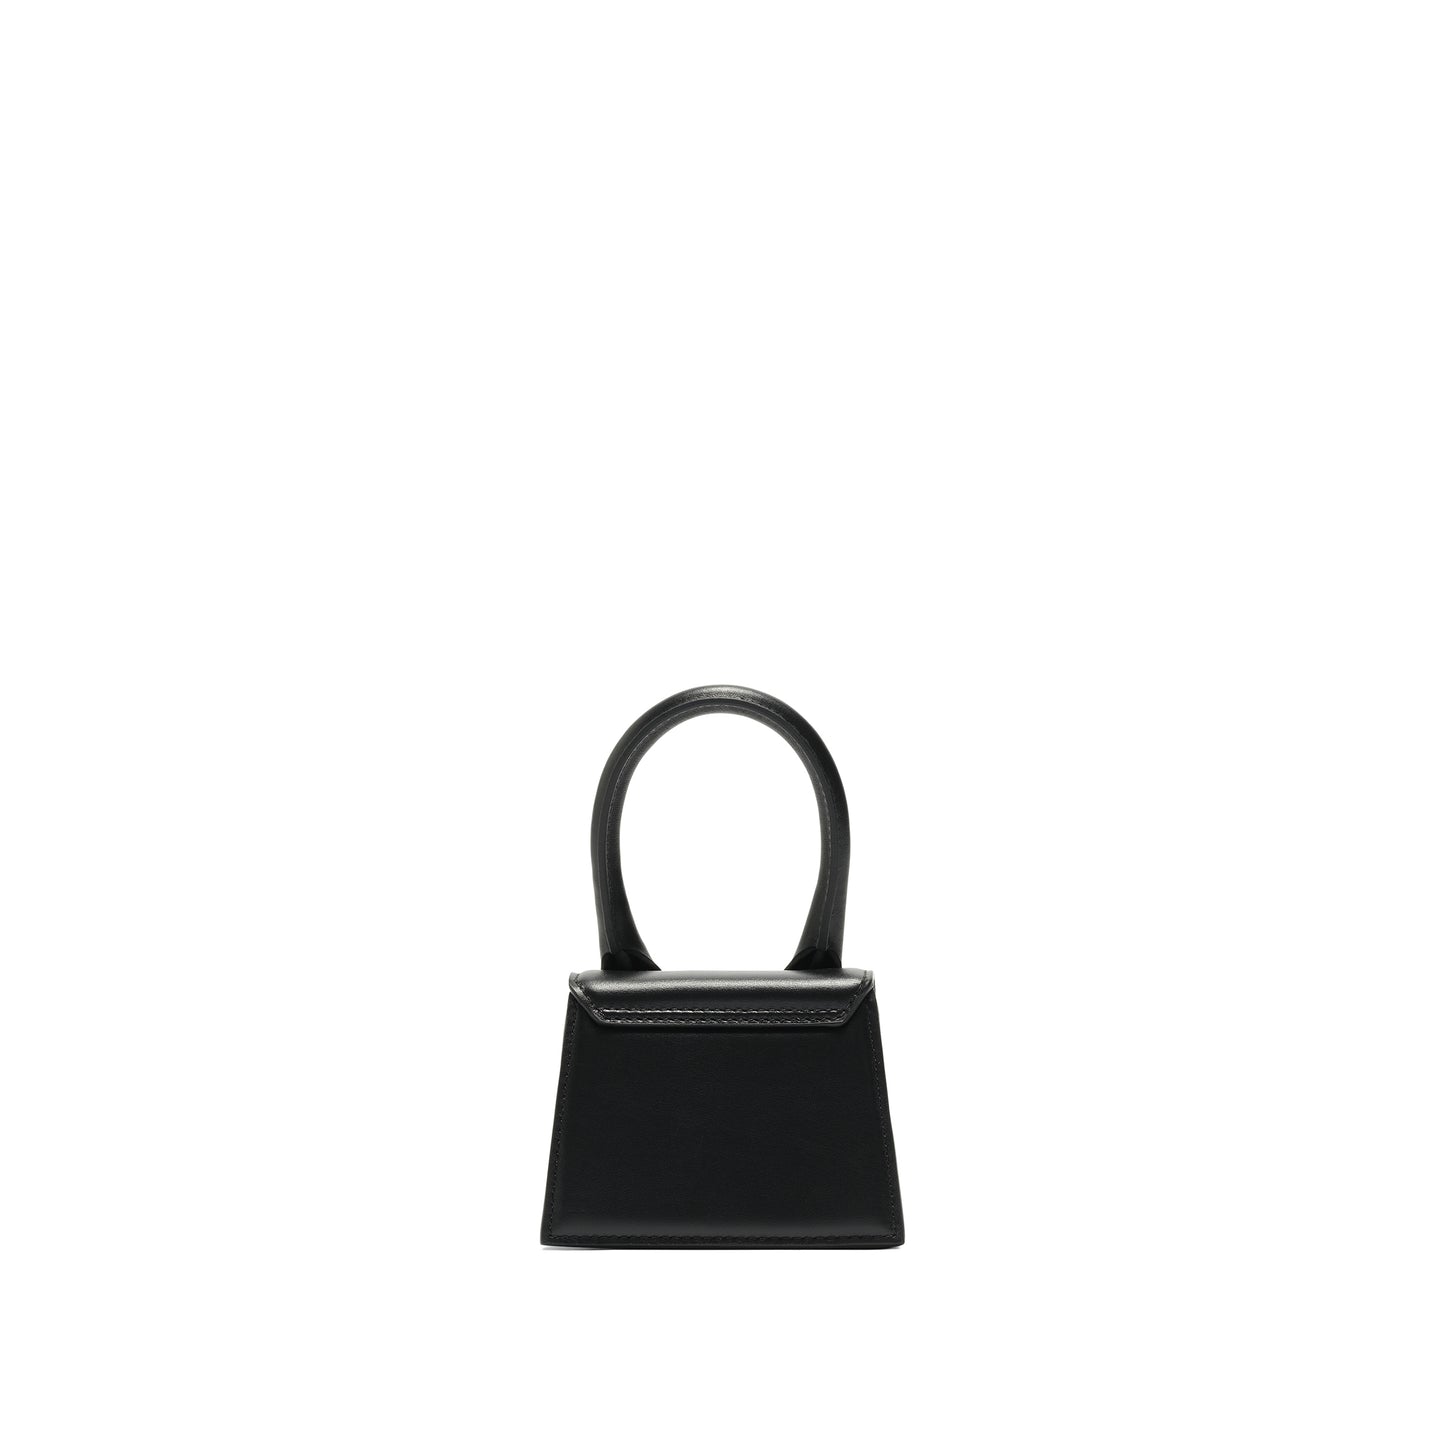 Le Chiquito Mini Leather Bag in Black